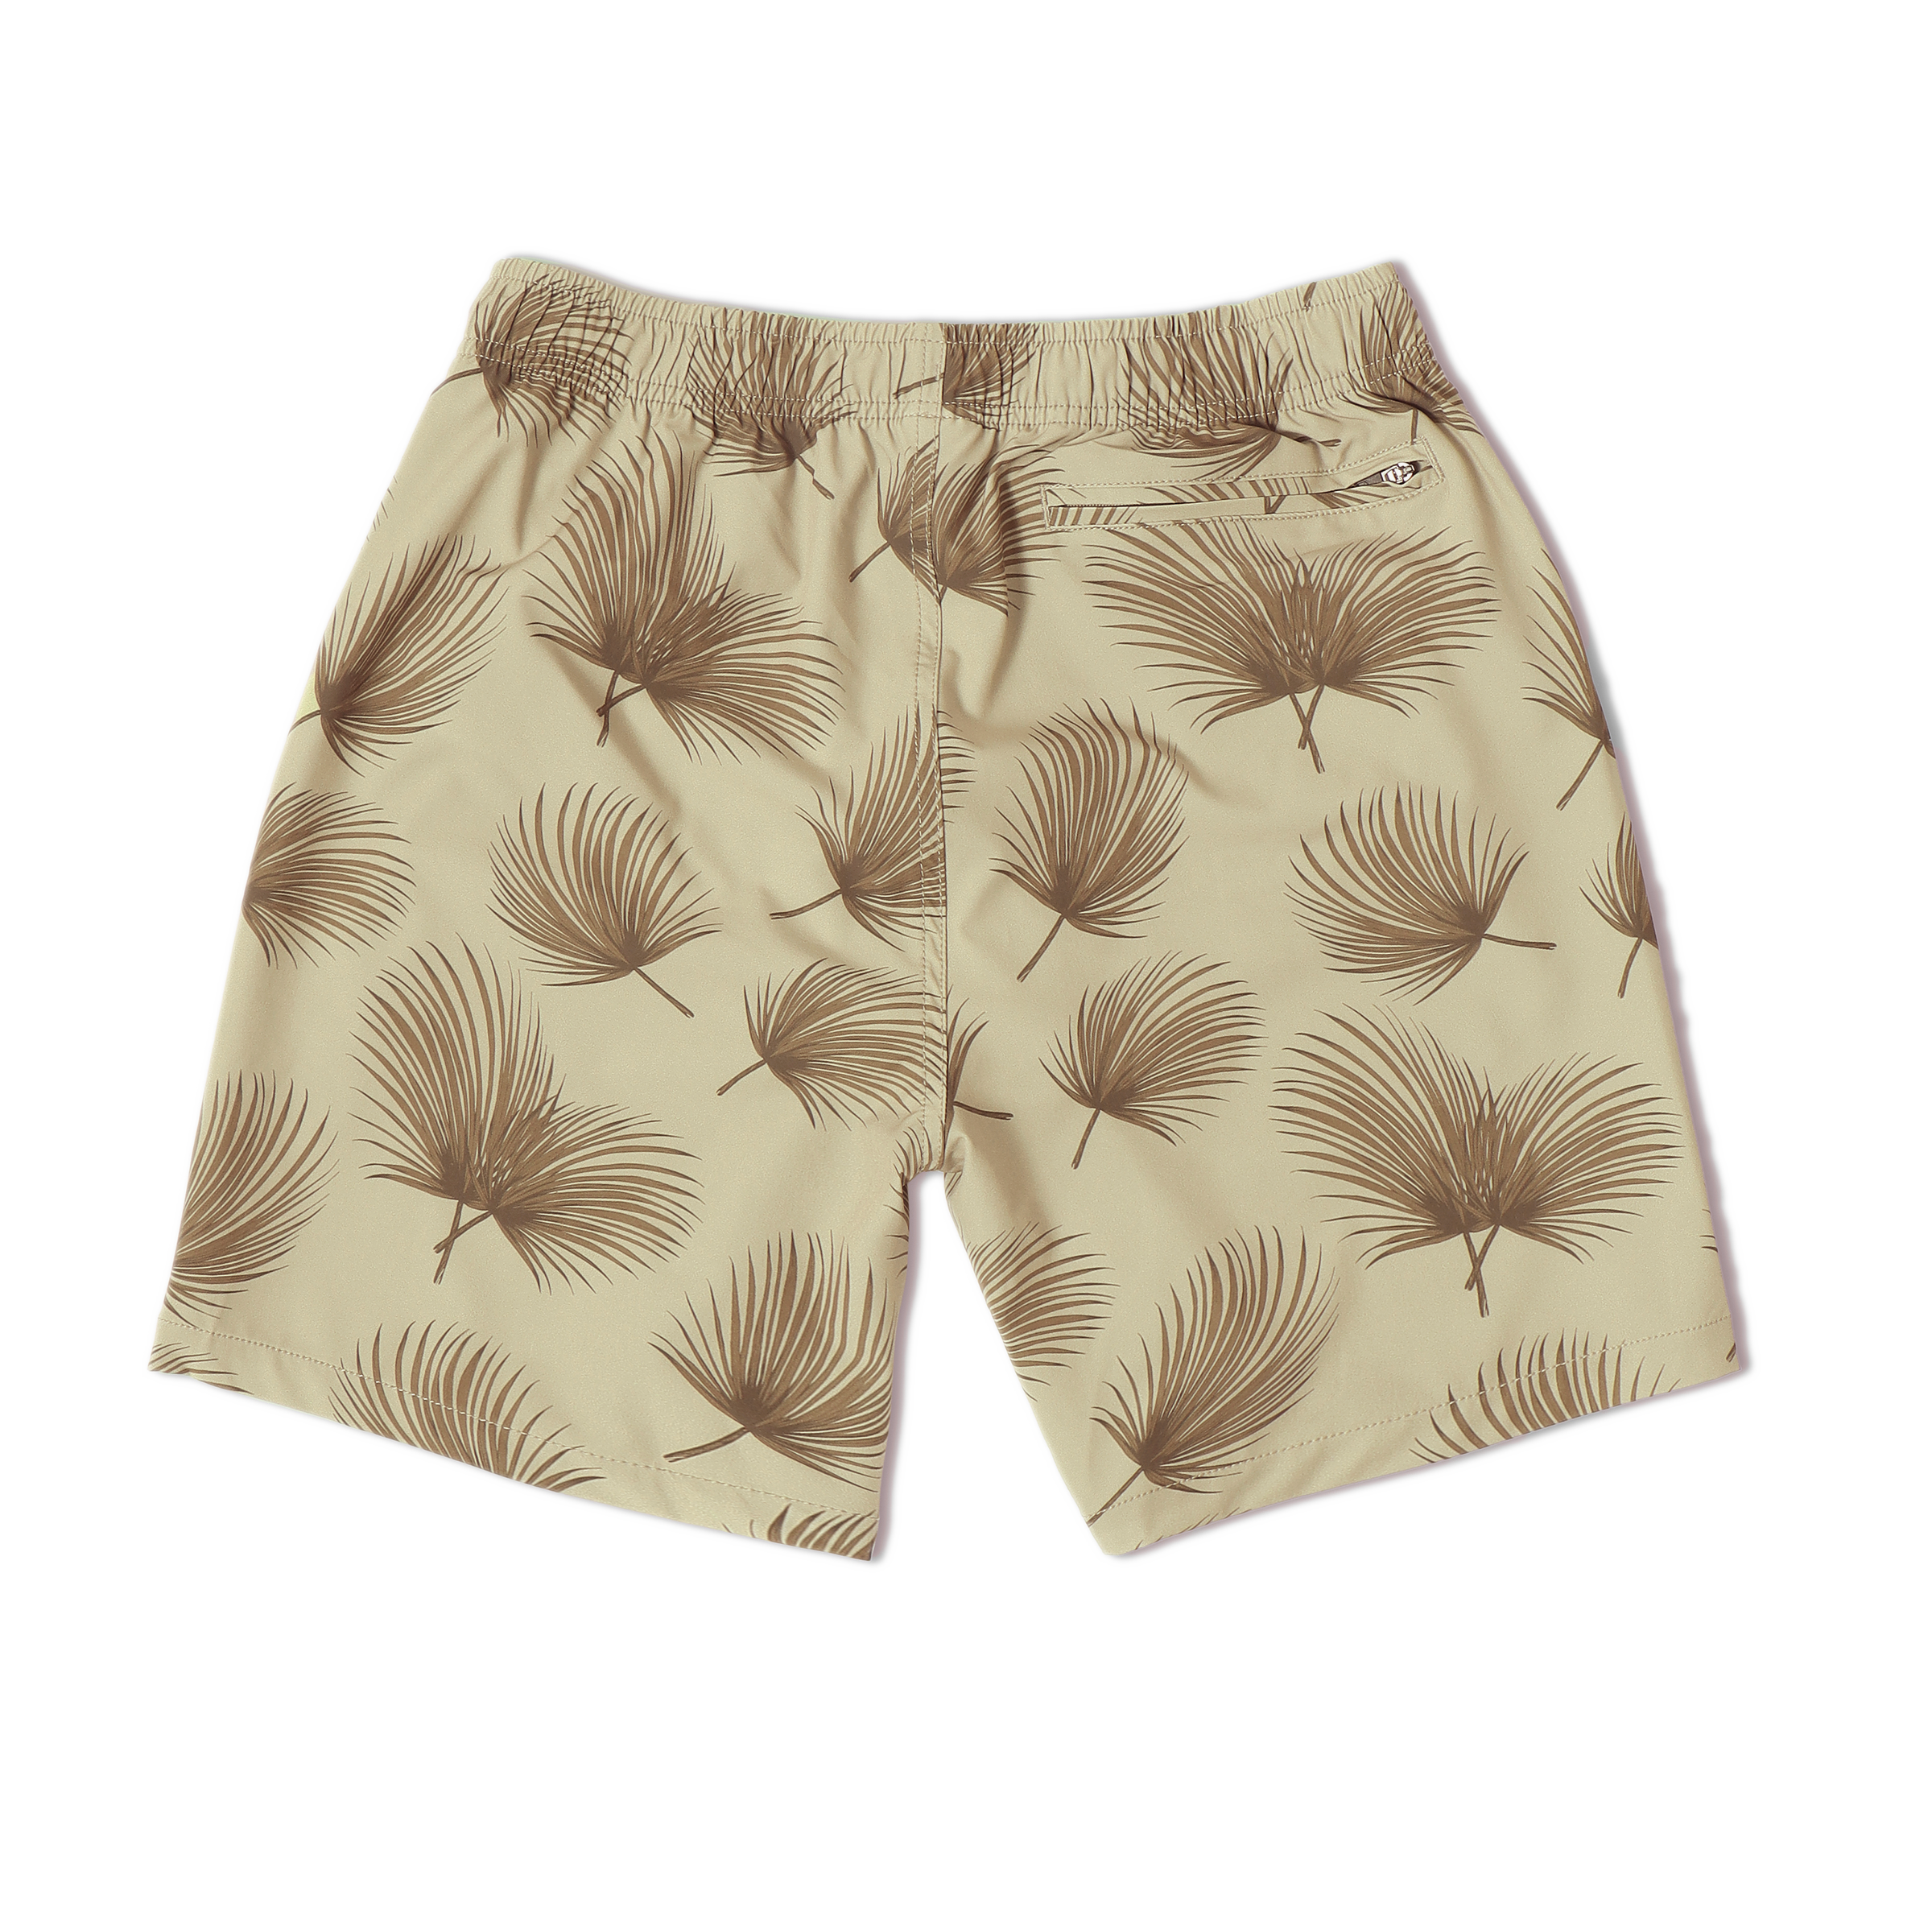 Stretch Swim 7" Coastal Shade back with an elastic waistband and back right zippered pocket